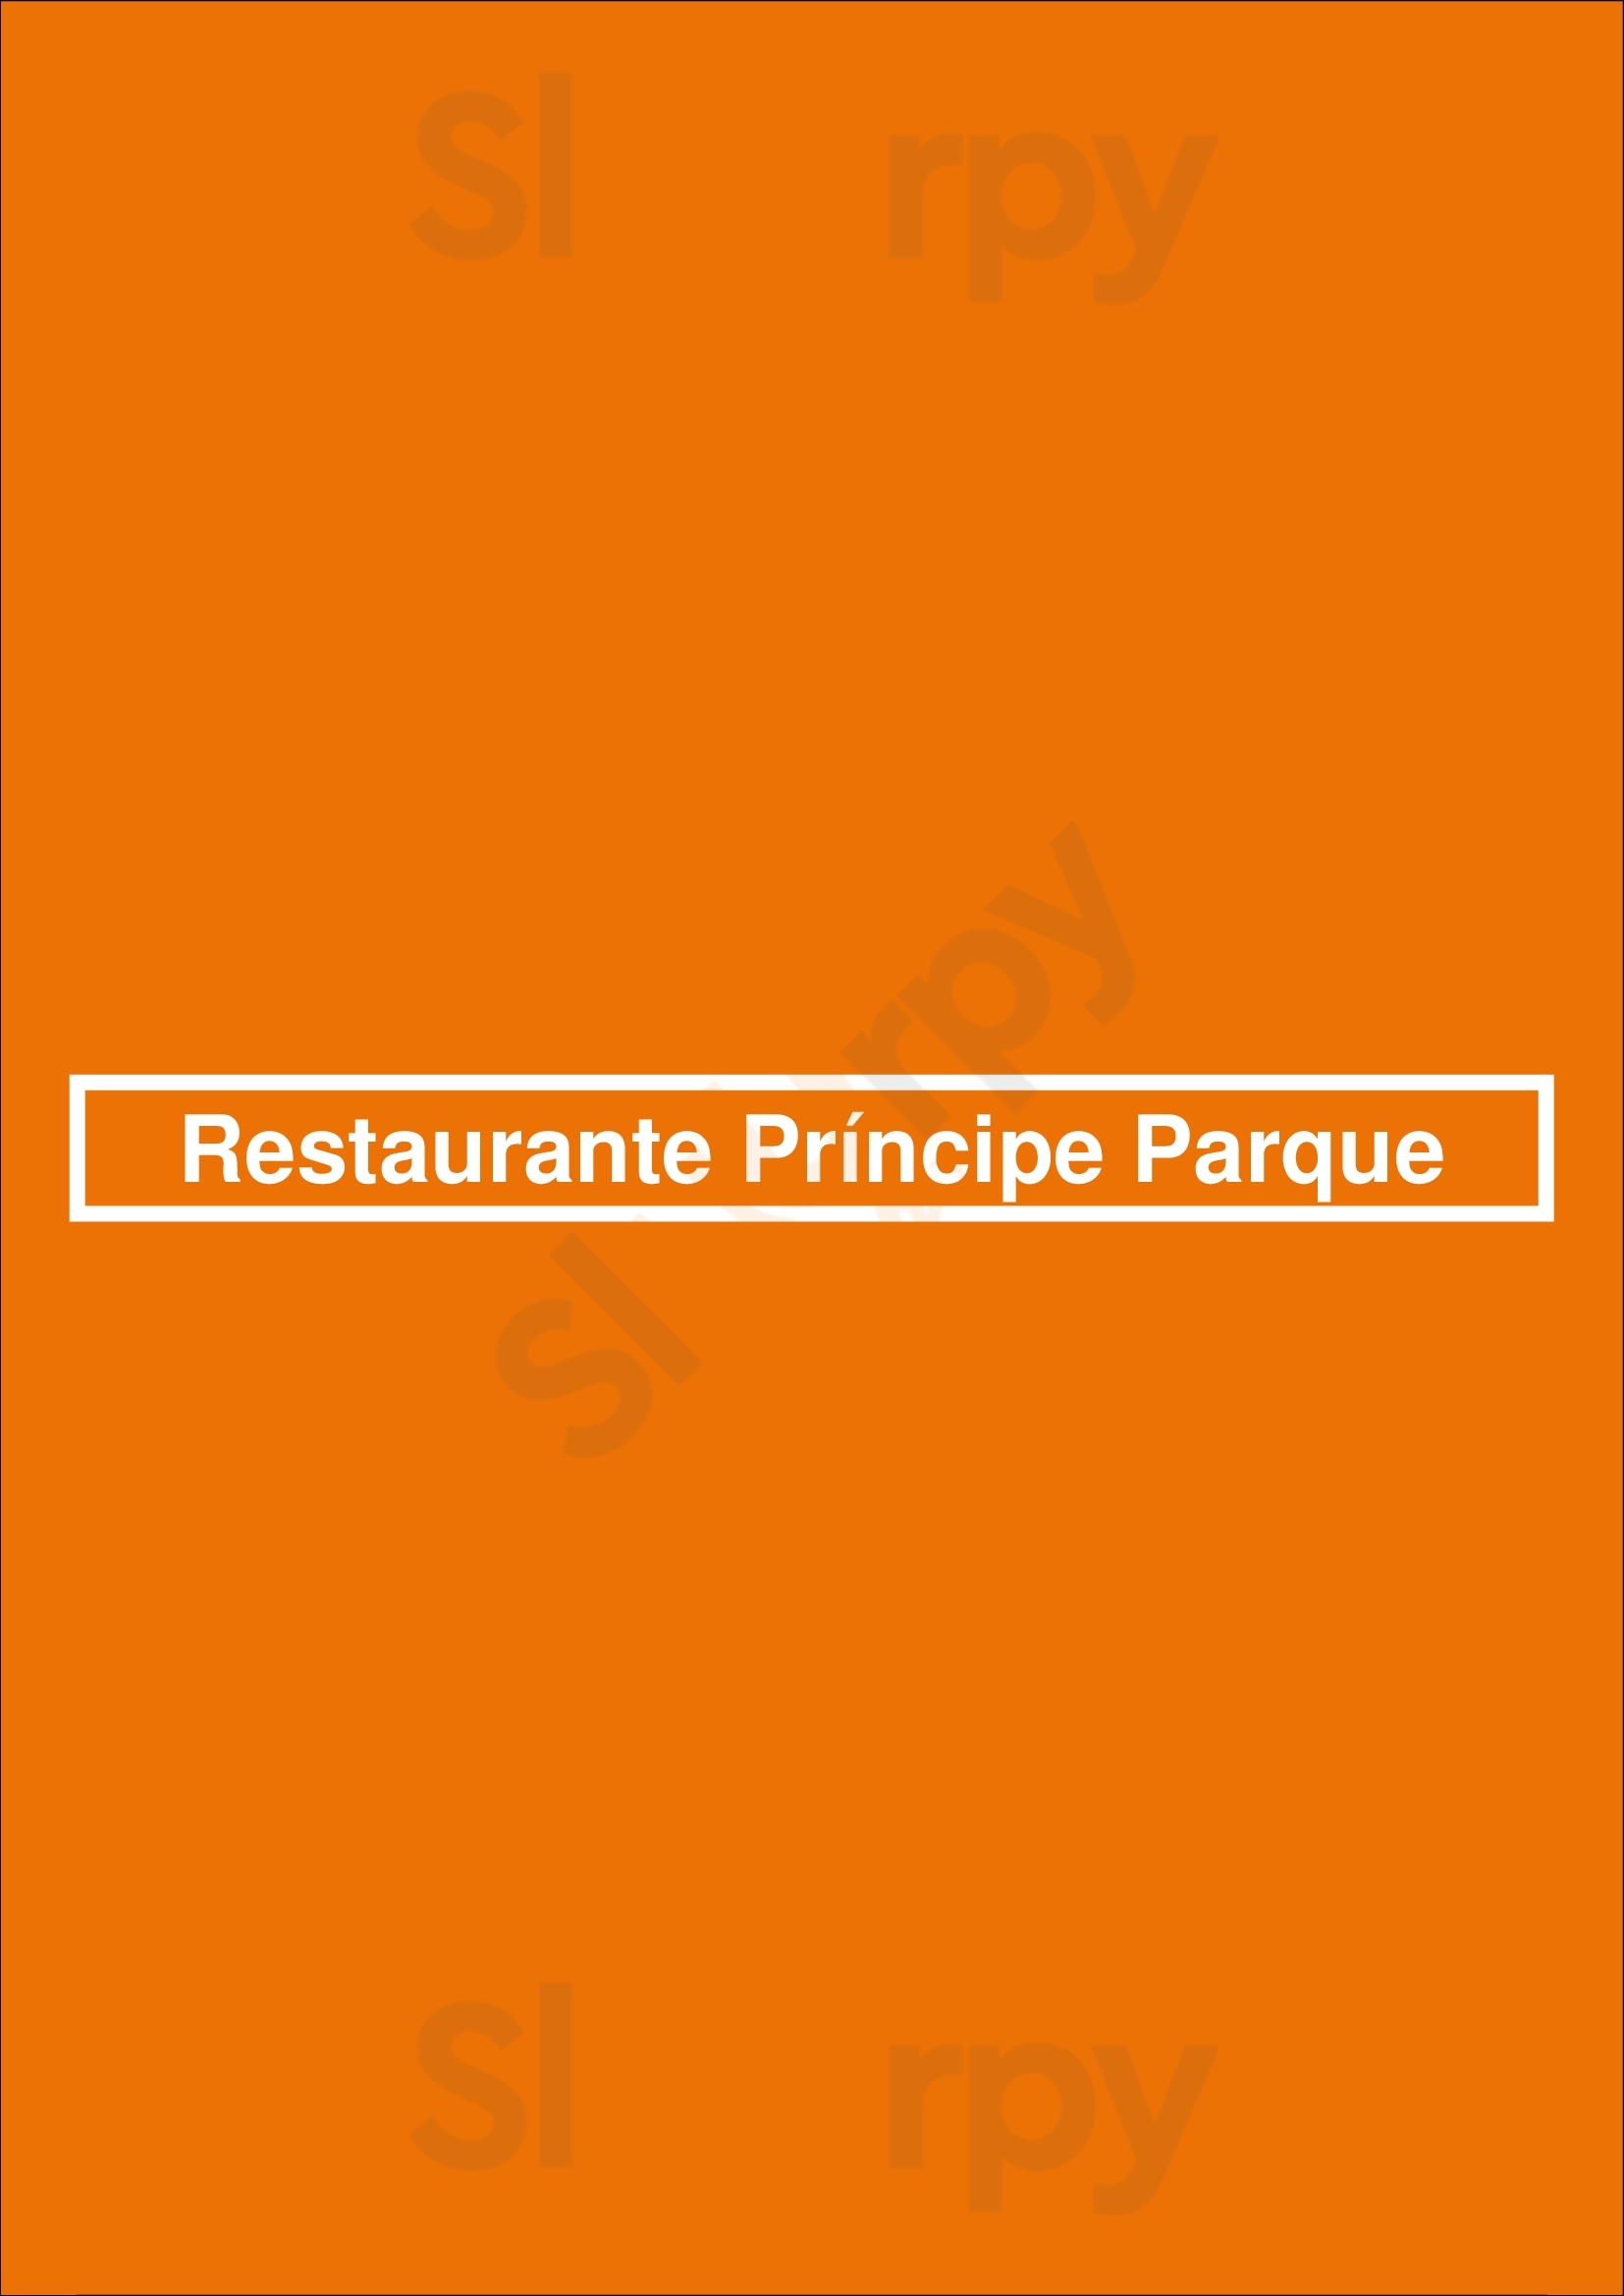 Restaurante Príncipe Parque Guimarães Menu - 1